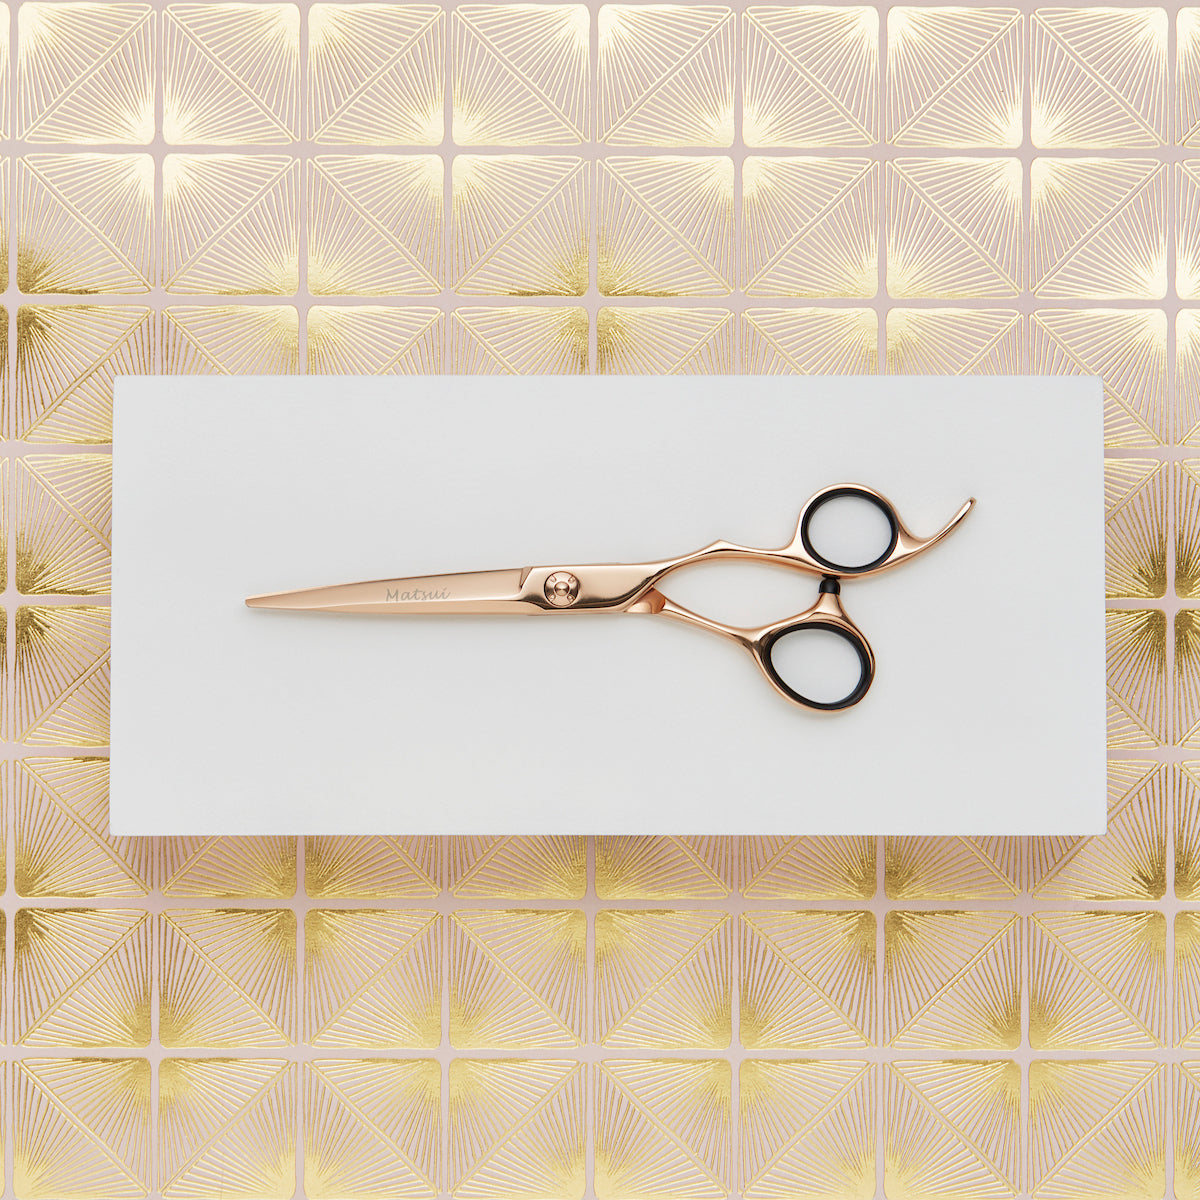 Premium Hairdressing Scissors, Matsui Rose Gold Aichei Mountain Offset Scissor (6743888527426)